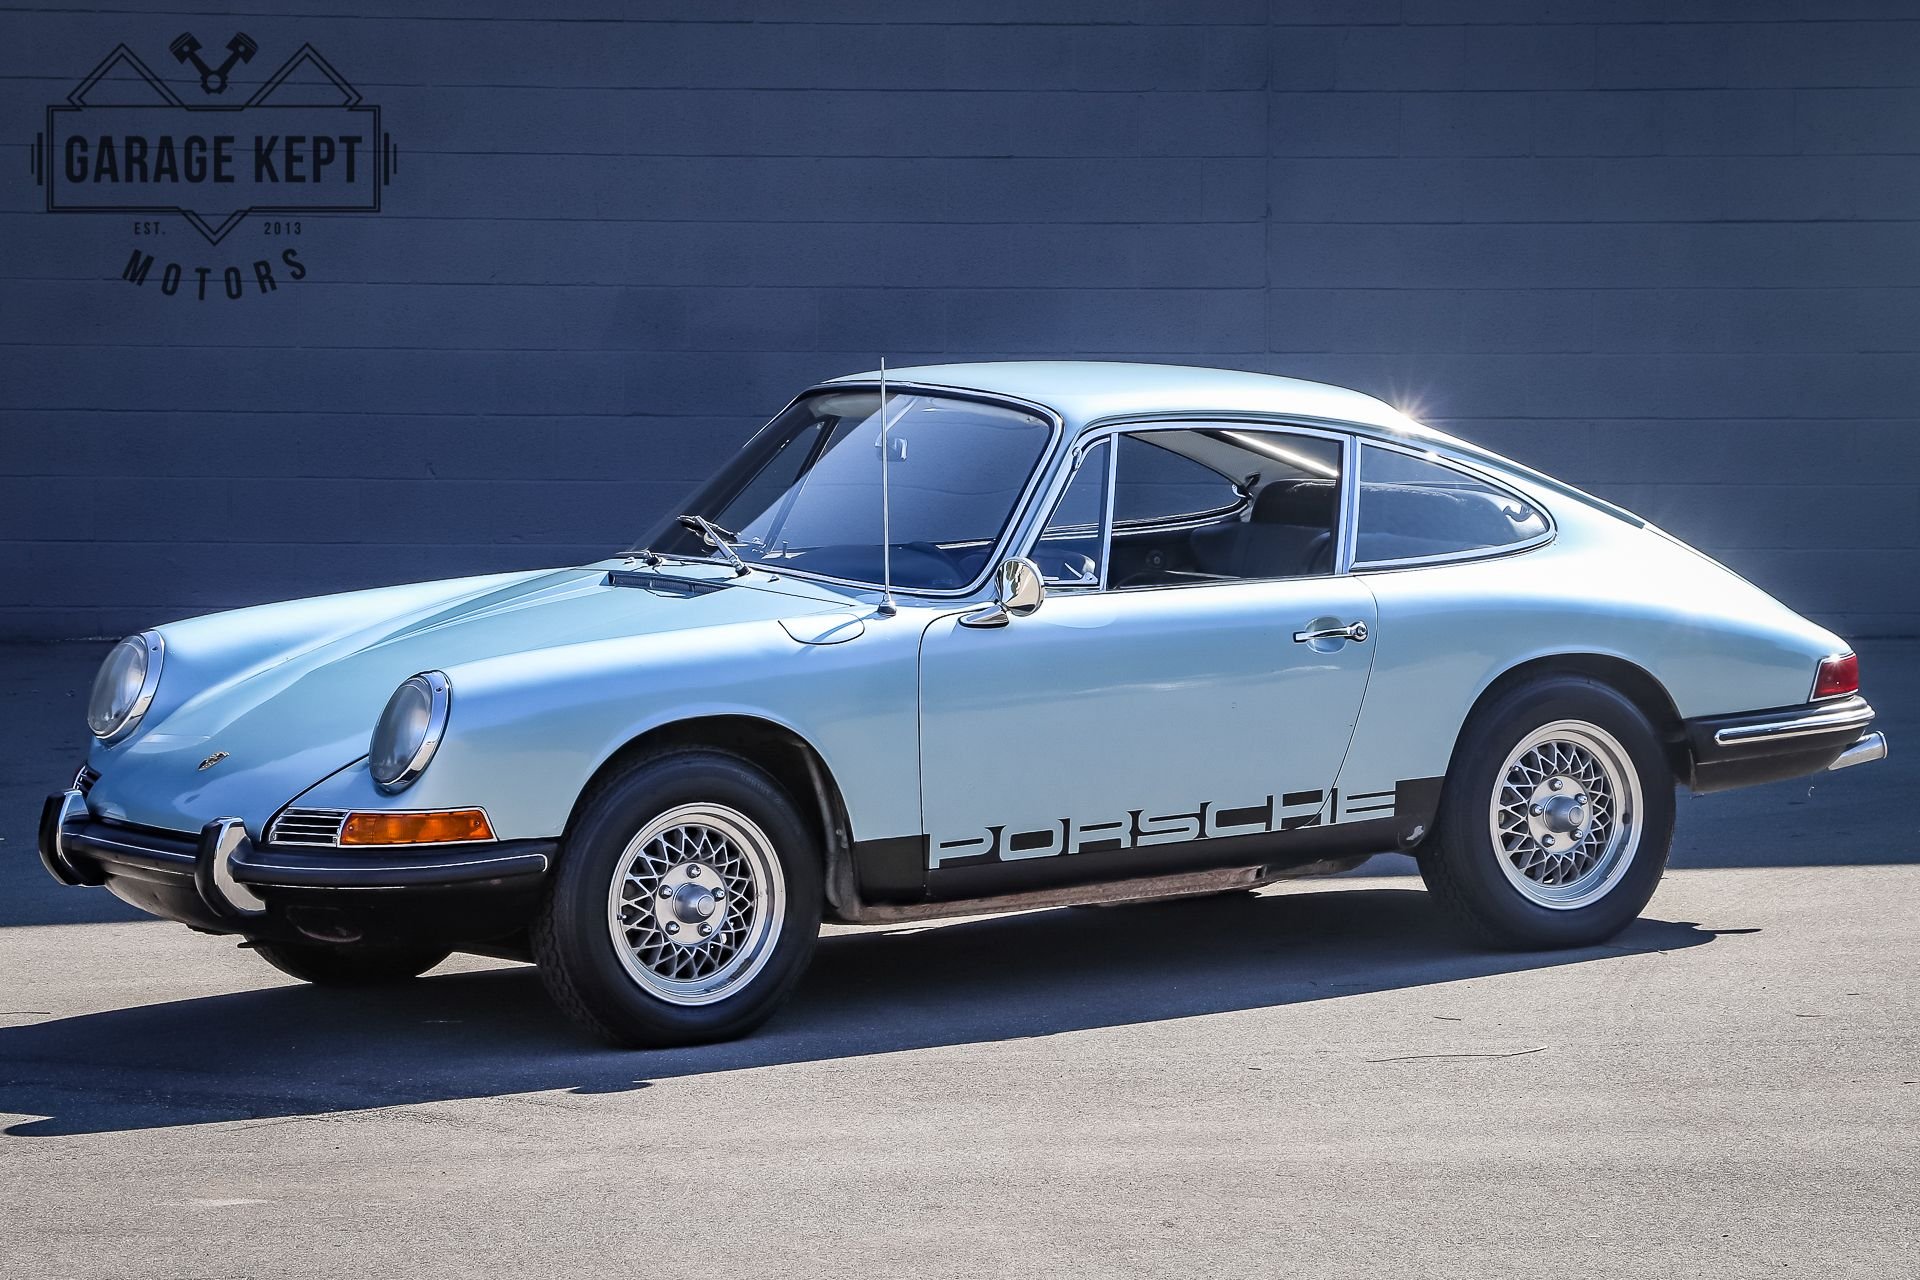 1966 Porsche 912 Is Almost Unused at 55k Miles, Has Low $37,500 Price -  autoevolution